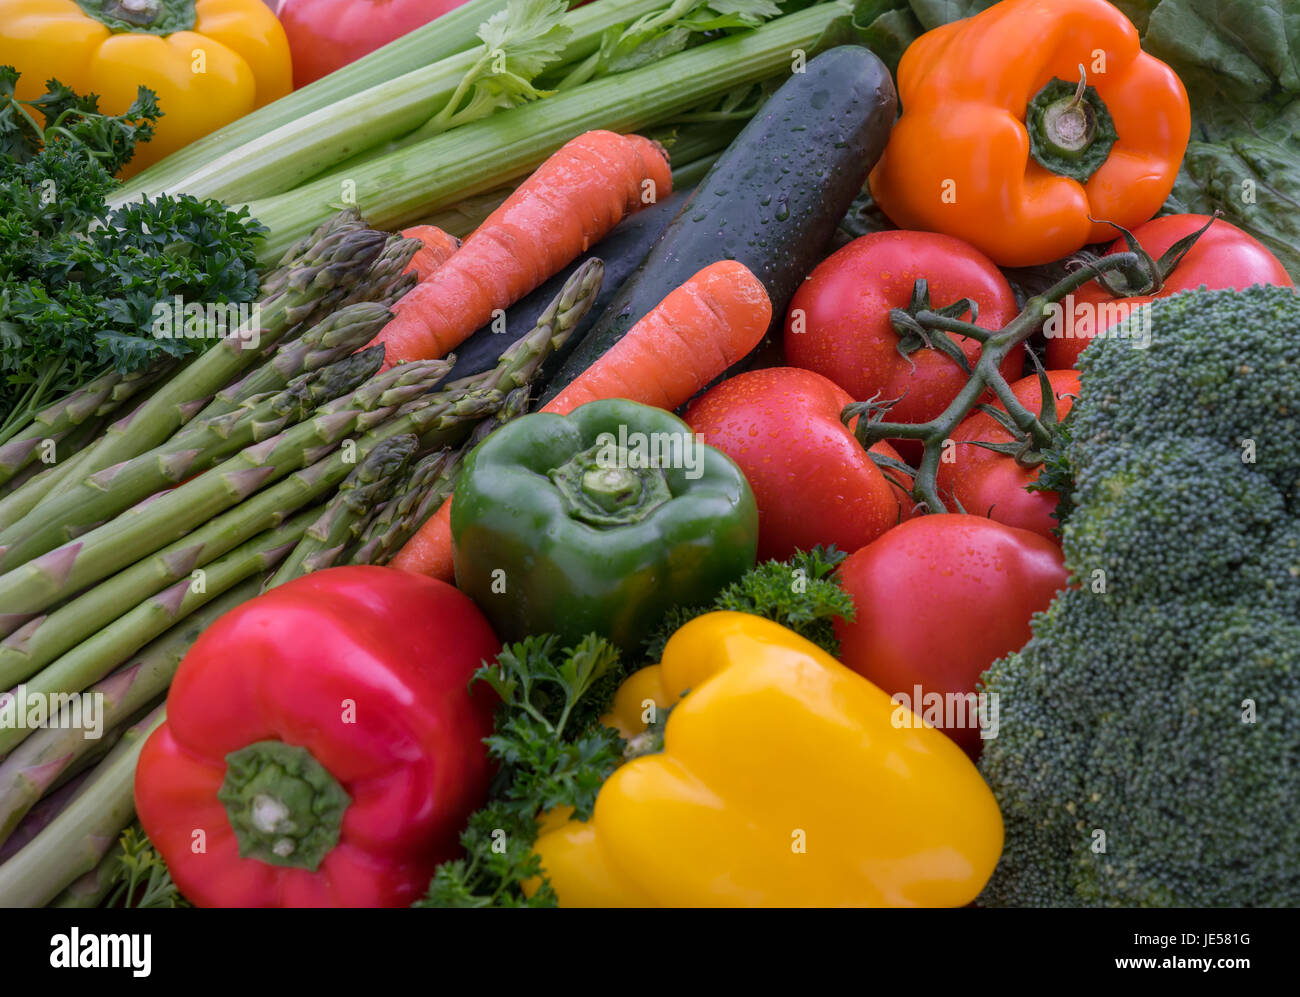 Frisches rohes Gemüse - Tomaten, Paprika, Karotten, Brokkoli, Spargel, Sellerie Stockfoto